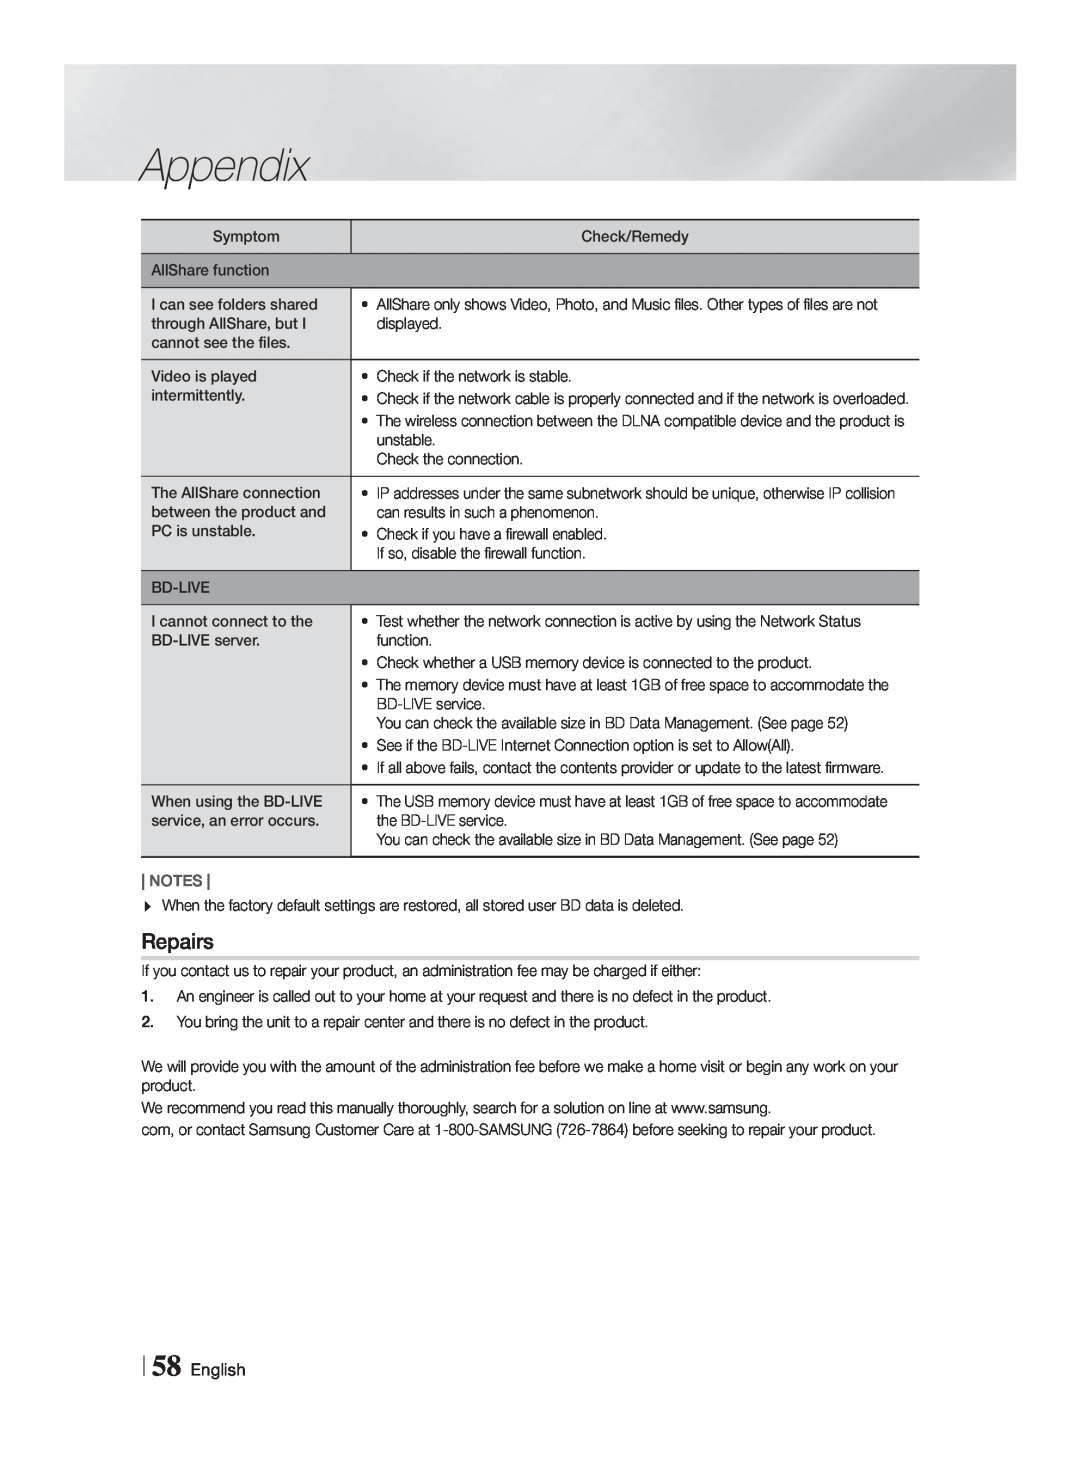 Samsung HT-F9730W/ZA user manual Repairs, Appendix, 58 English, Notes 